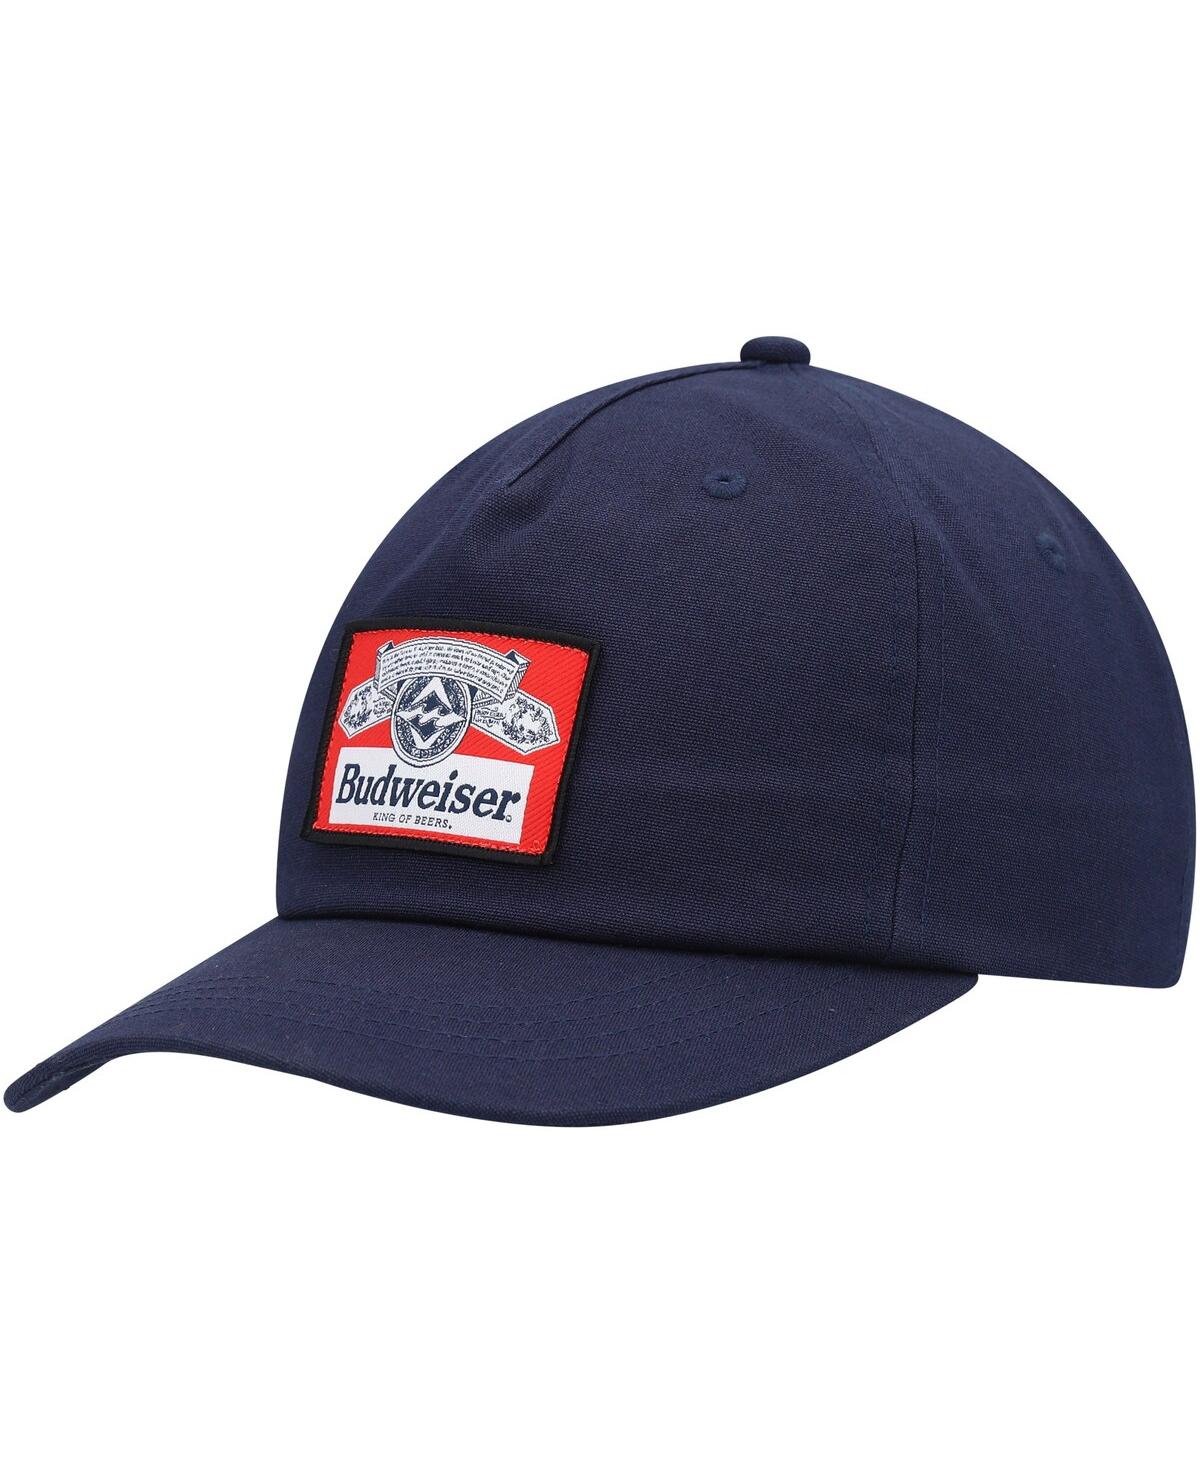 Men's x Budweiser Navy Insignia Snapback Hat - Navy